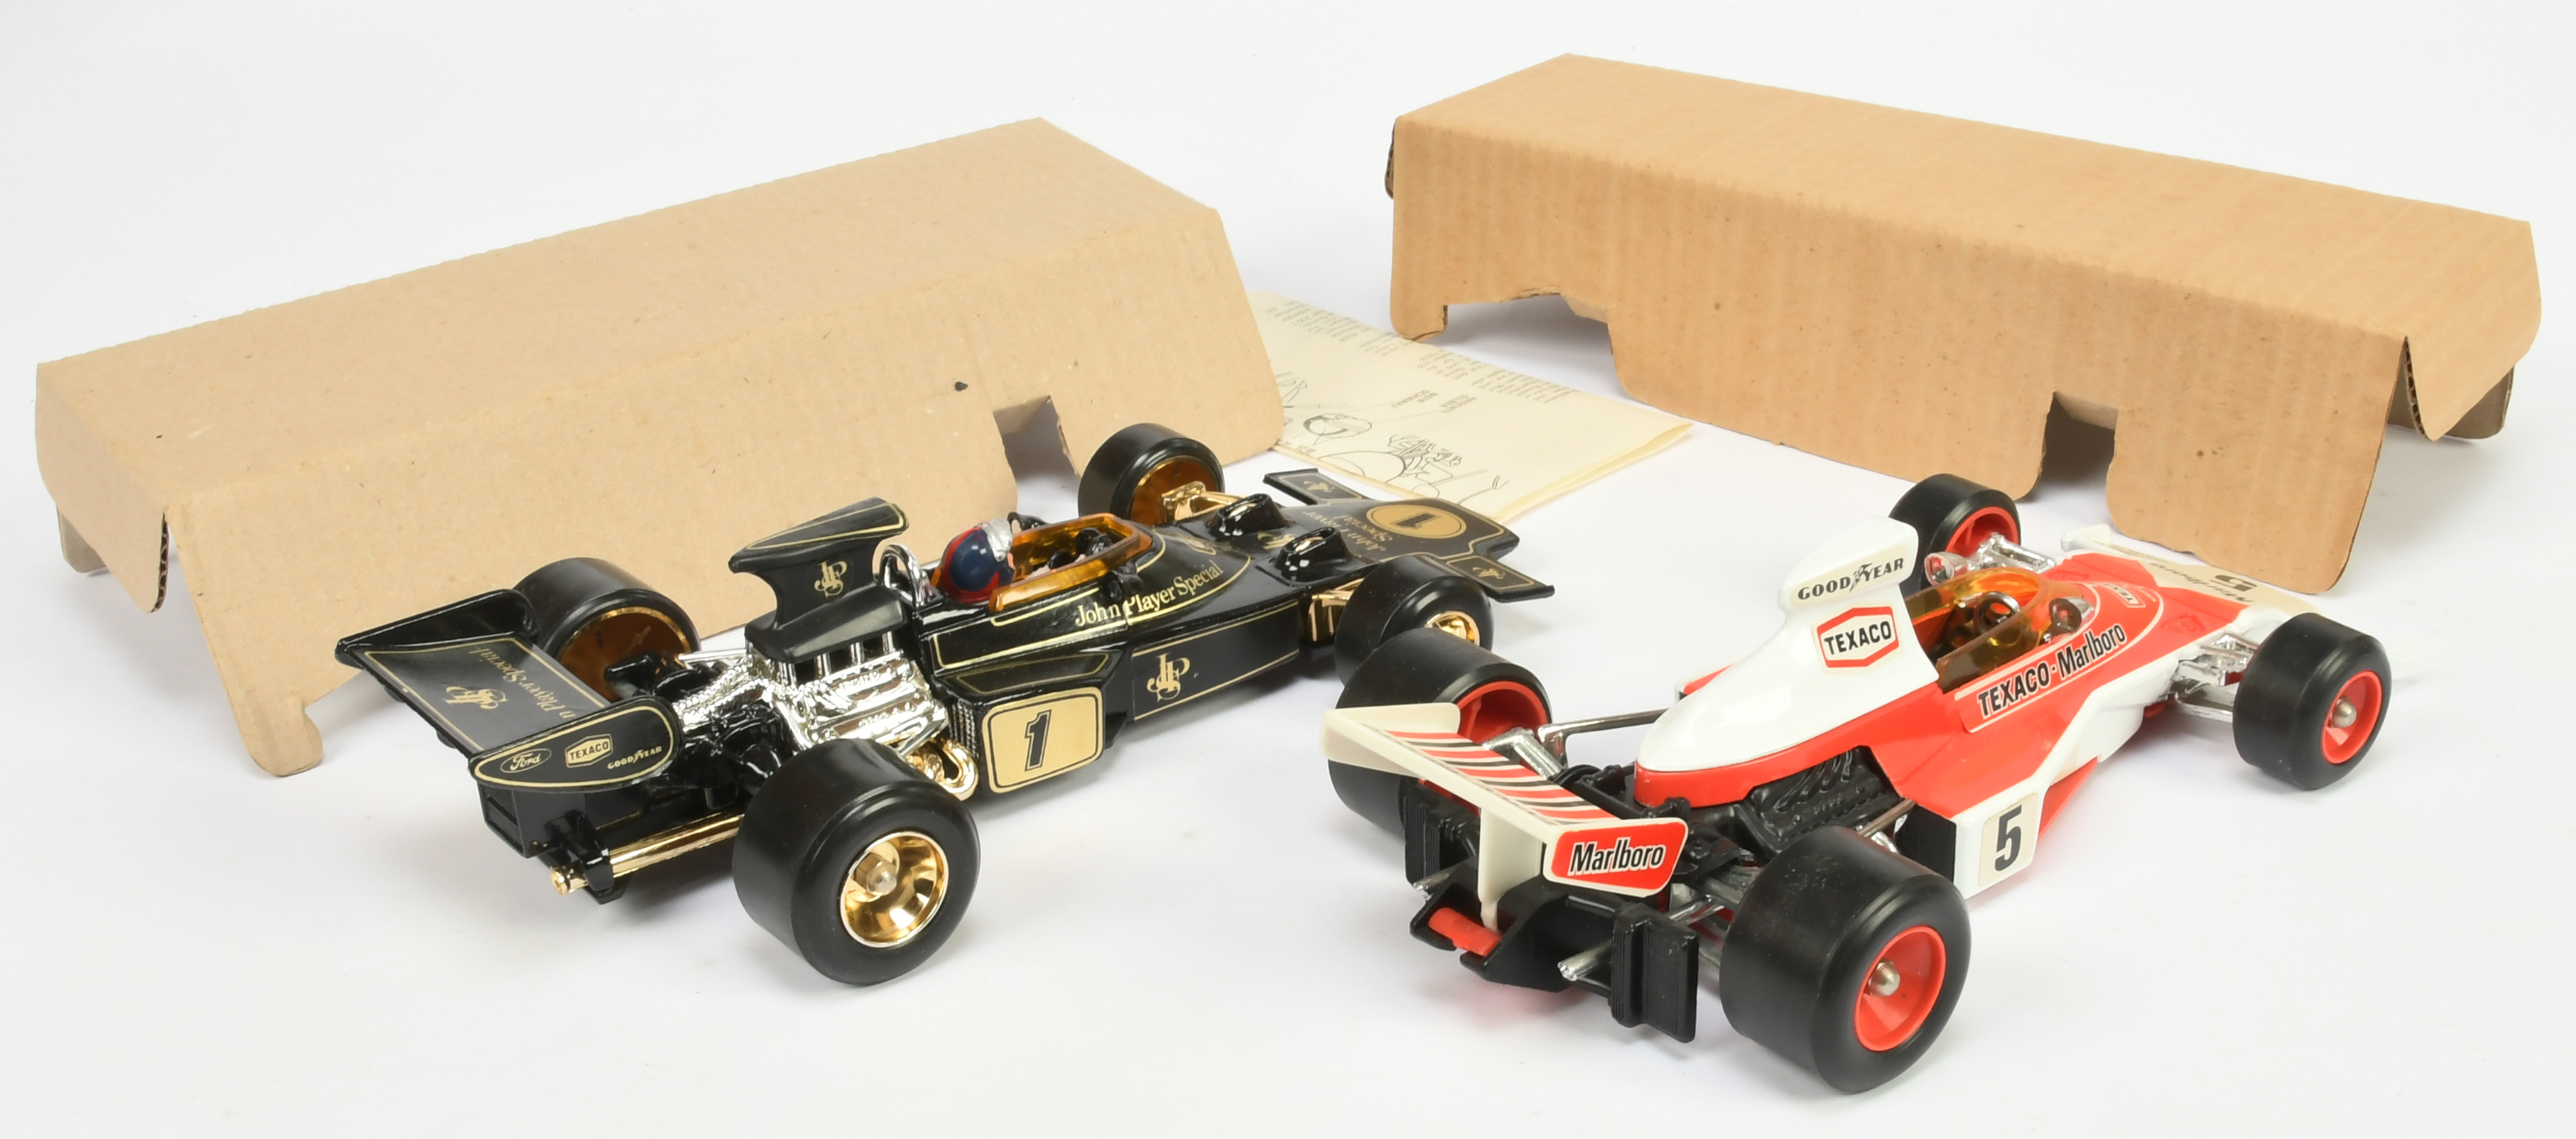 Corgi Toys (1/18th) Formula 1  Racing Cars A Pair (1) 190 Lotus  "JPS" - Black and gold with Span... - Image 2 of 2